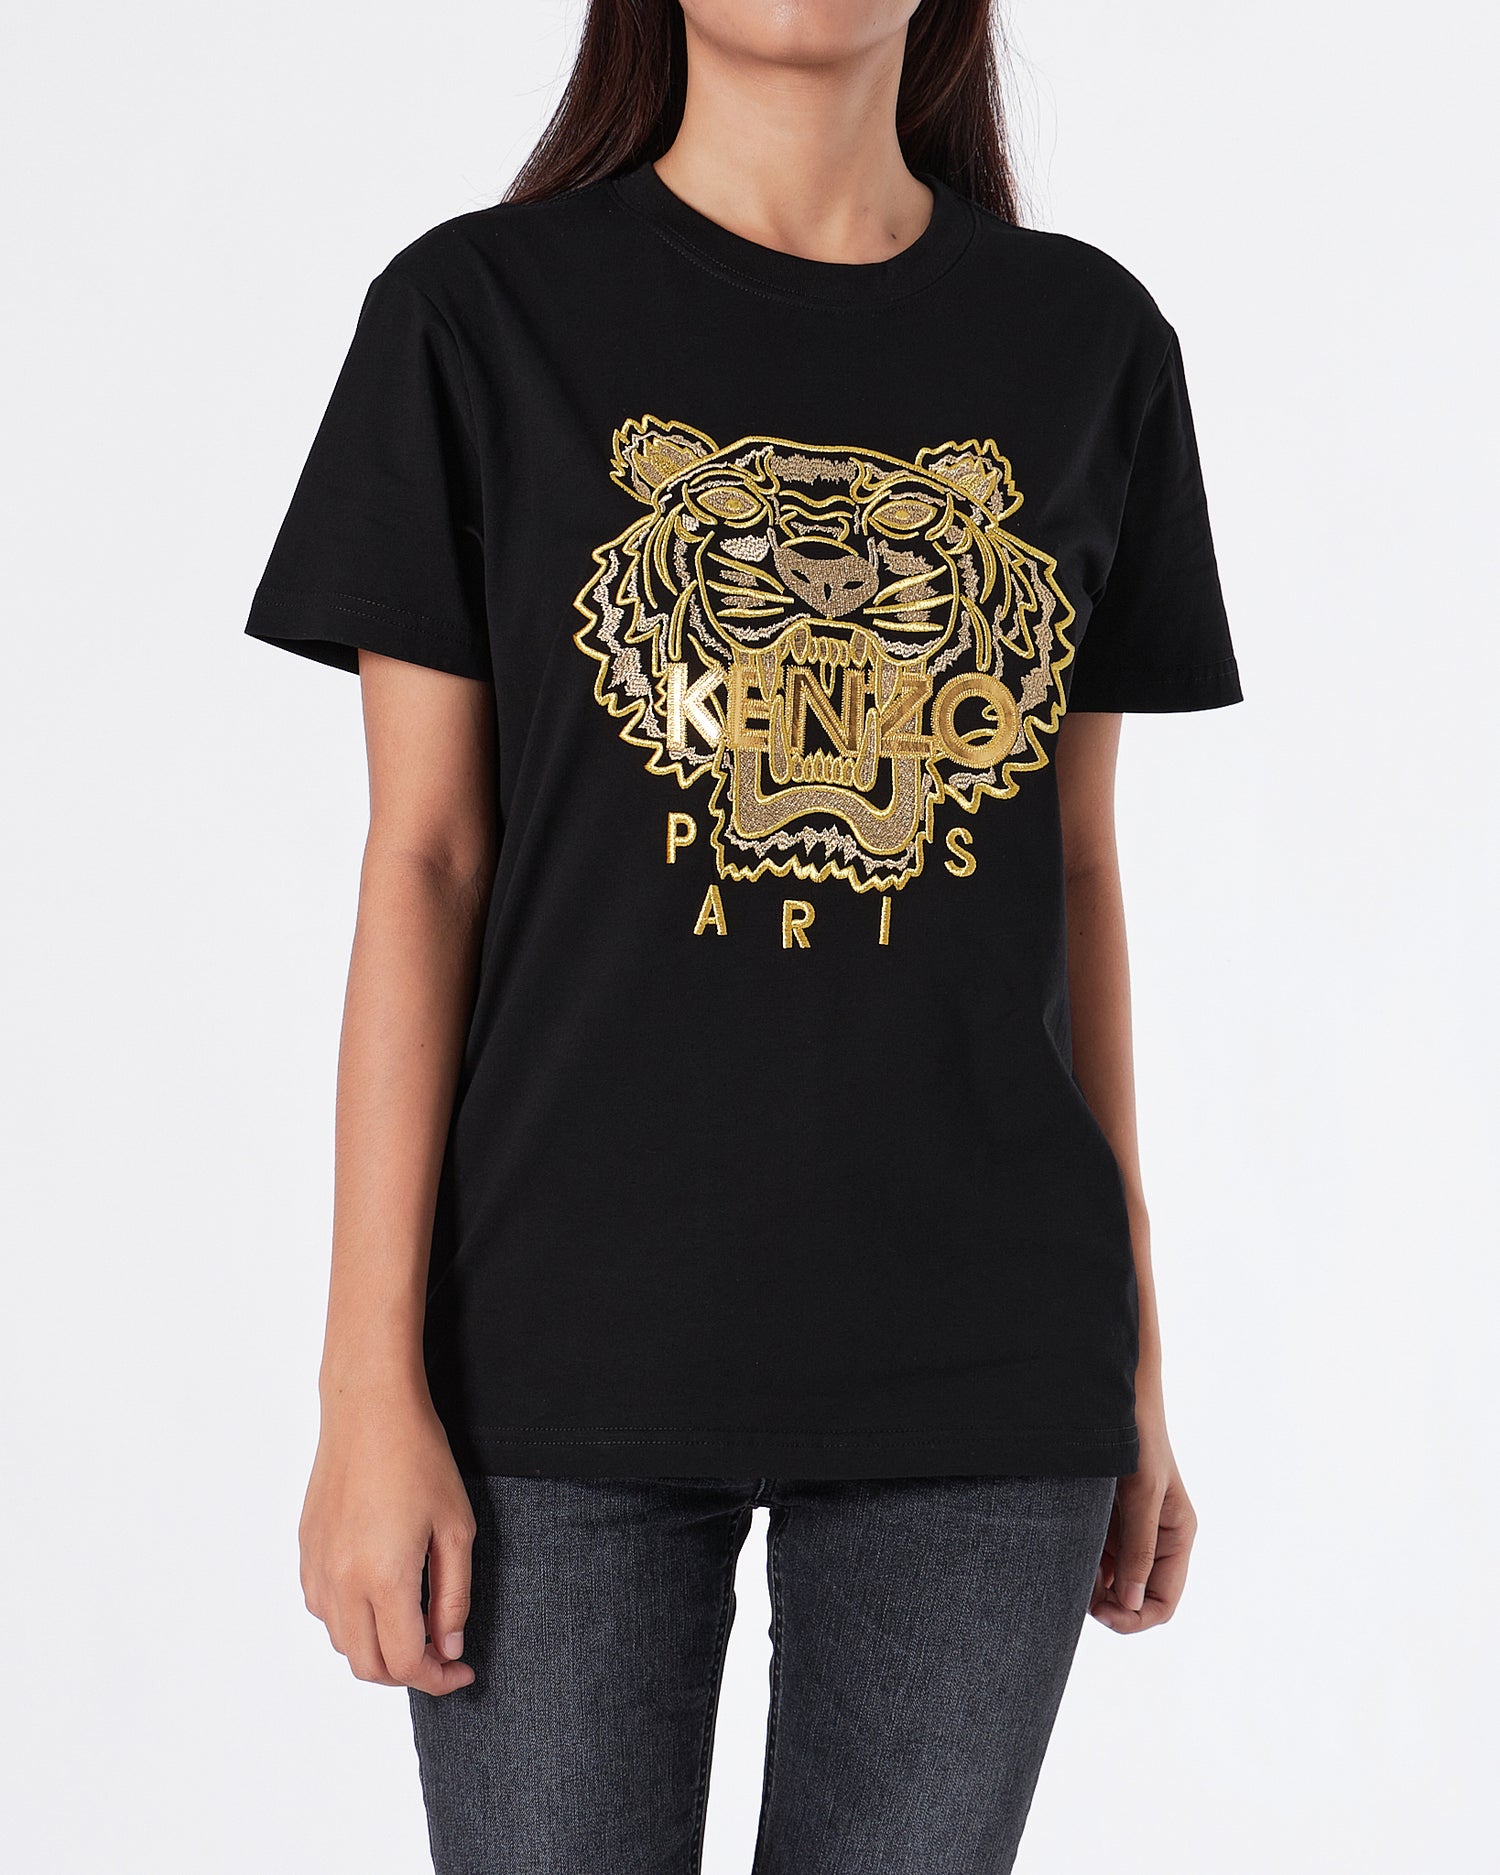 KEN Tiger Head Gold Embroidered Unisex Black T-Shirt 24.90